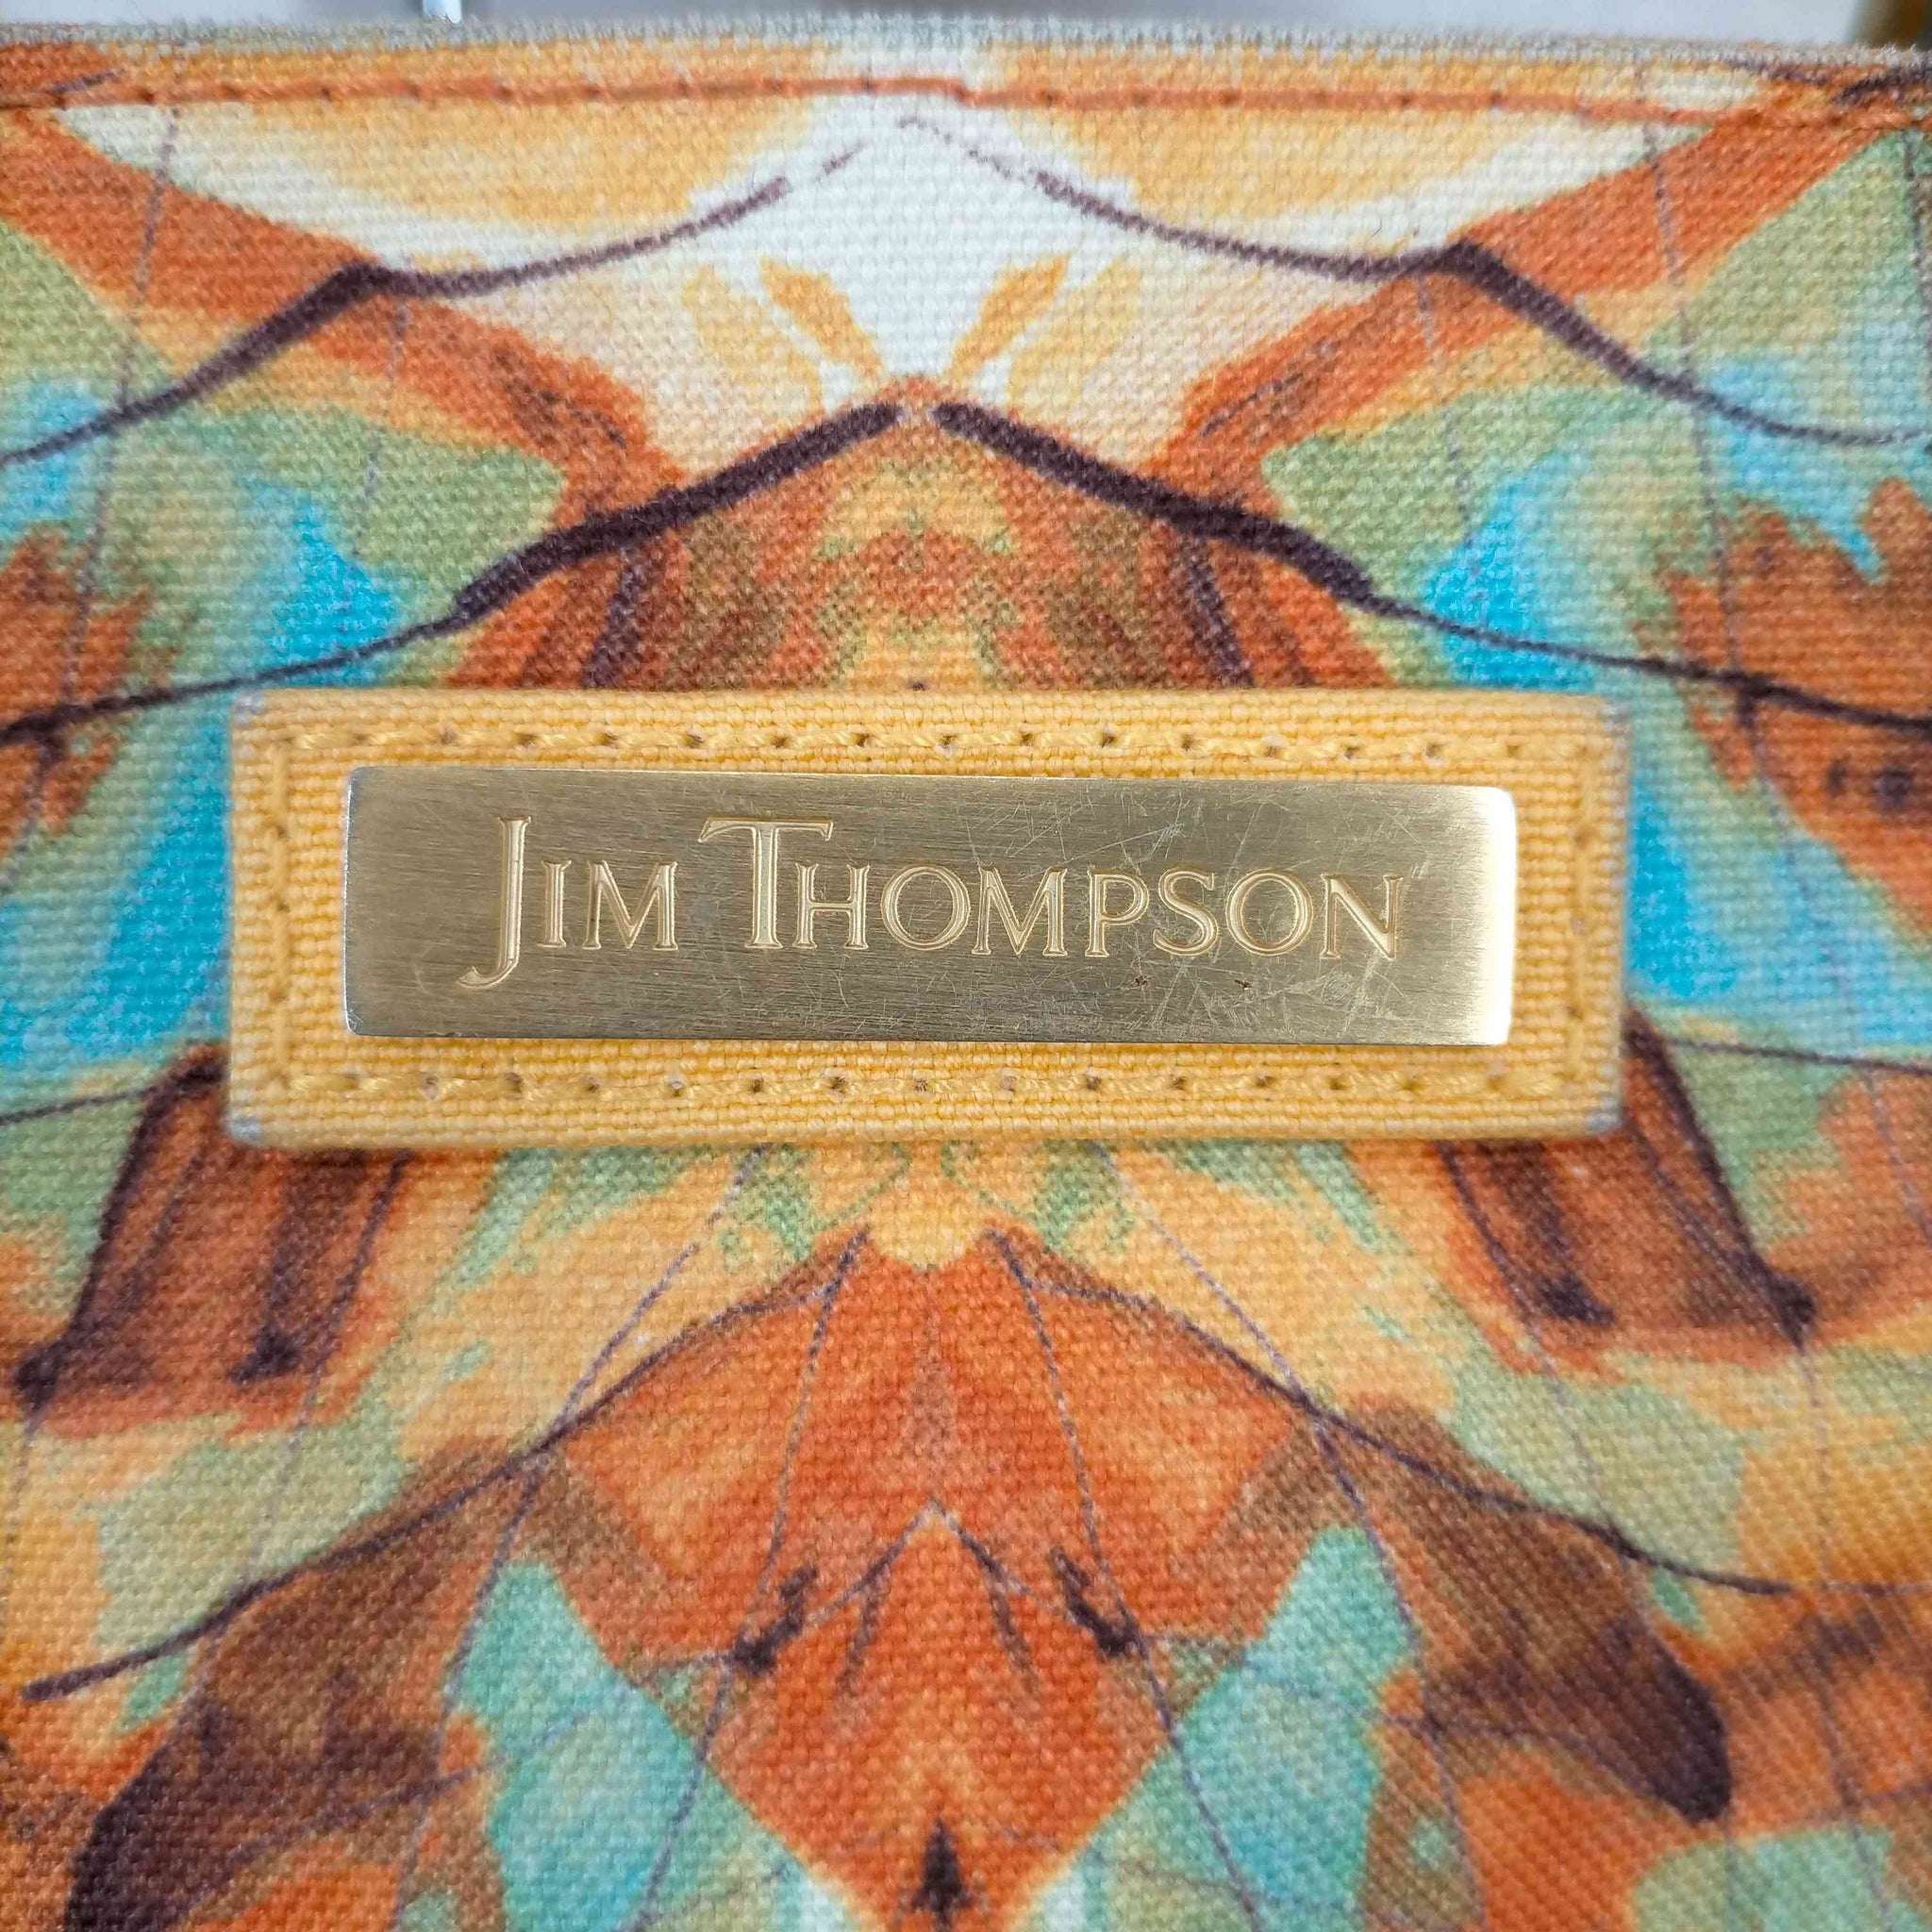 JIM THOMPSON(ジムトンプソン)ロゴプレート マルチカラー舟形トート